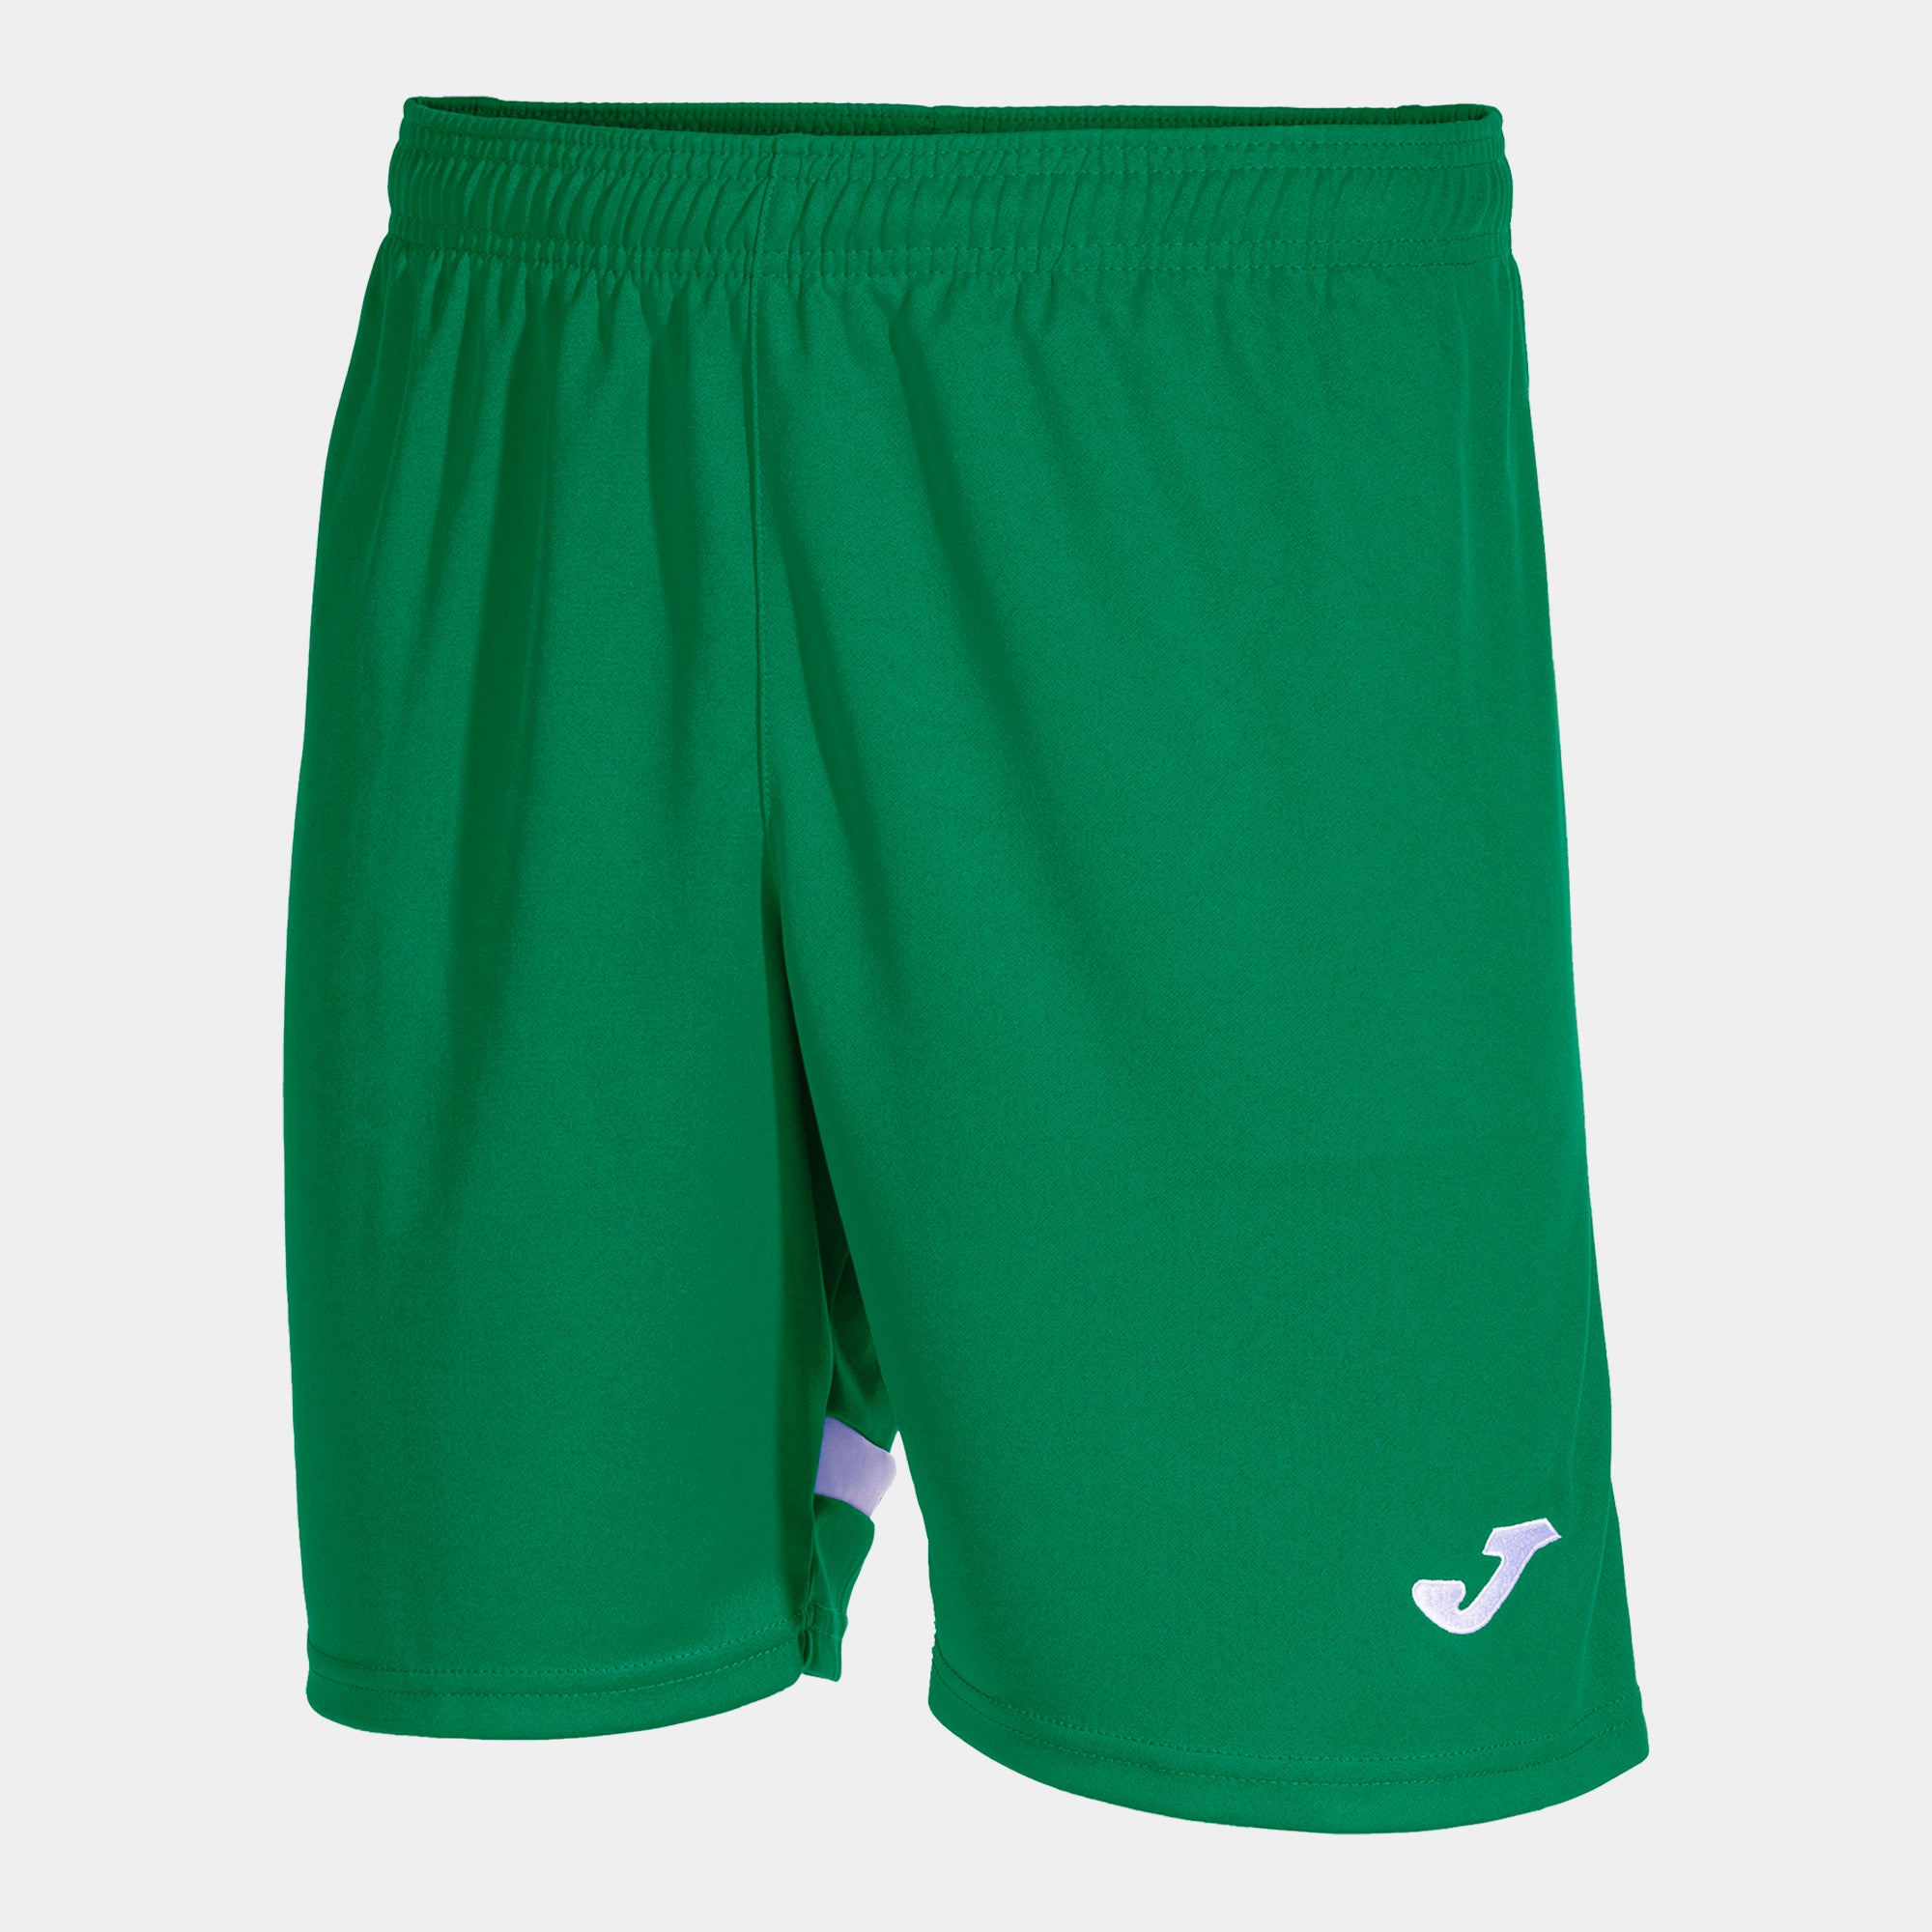 Joma Tokio Shorts - Green Medium/White